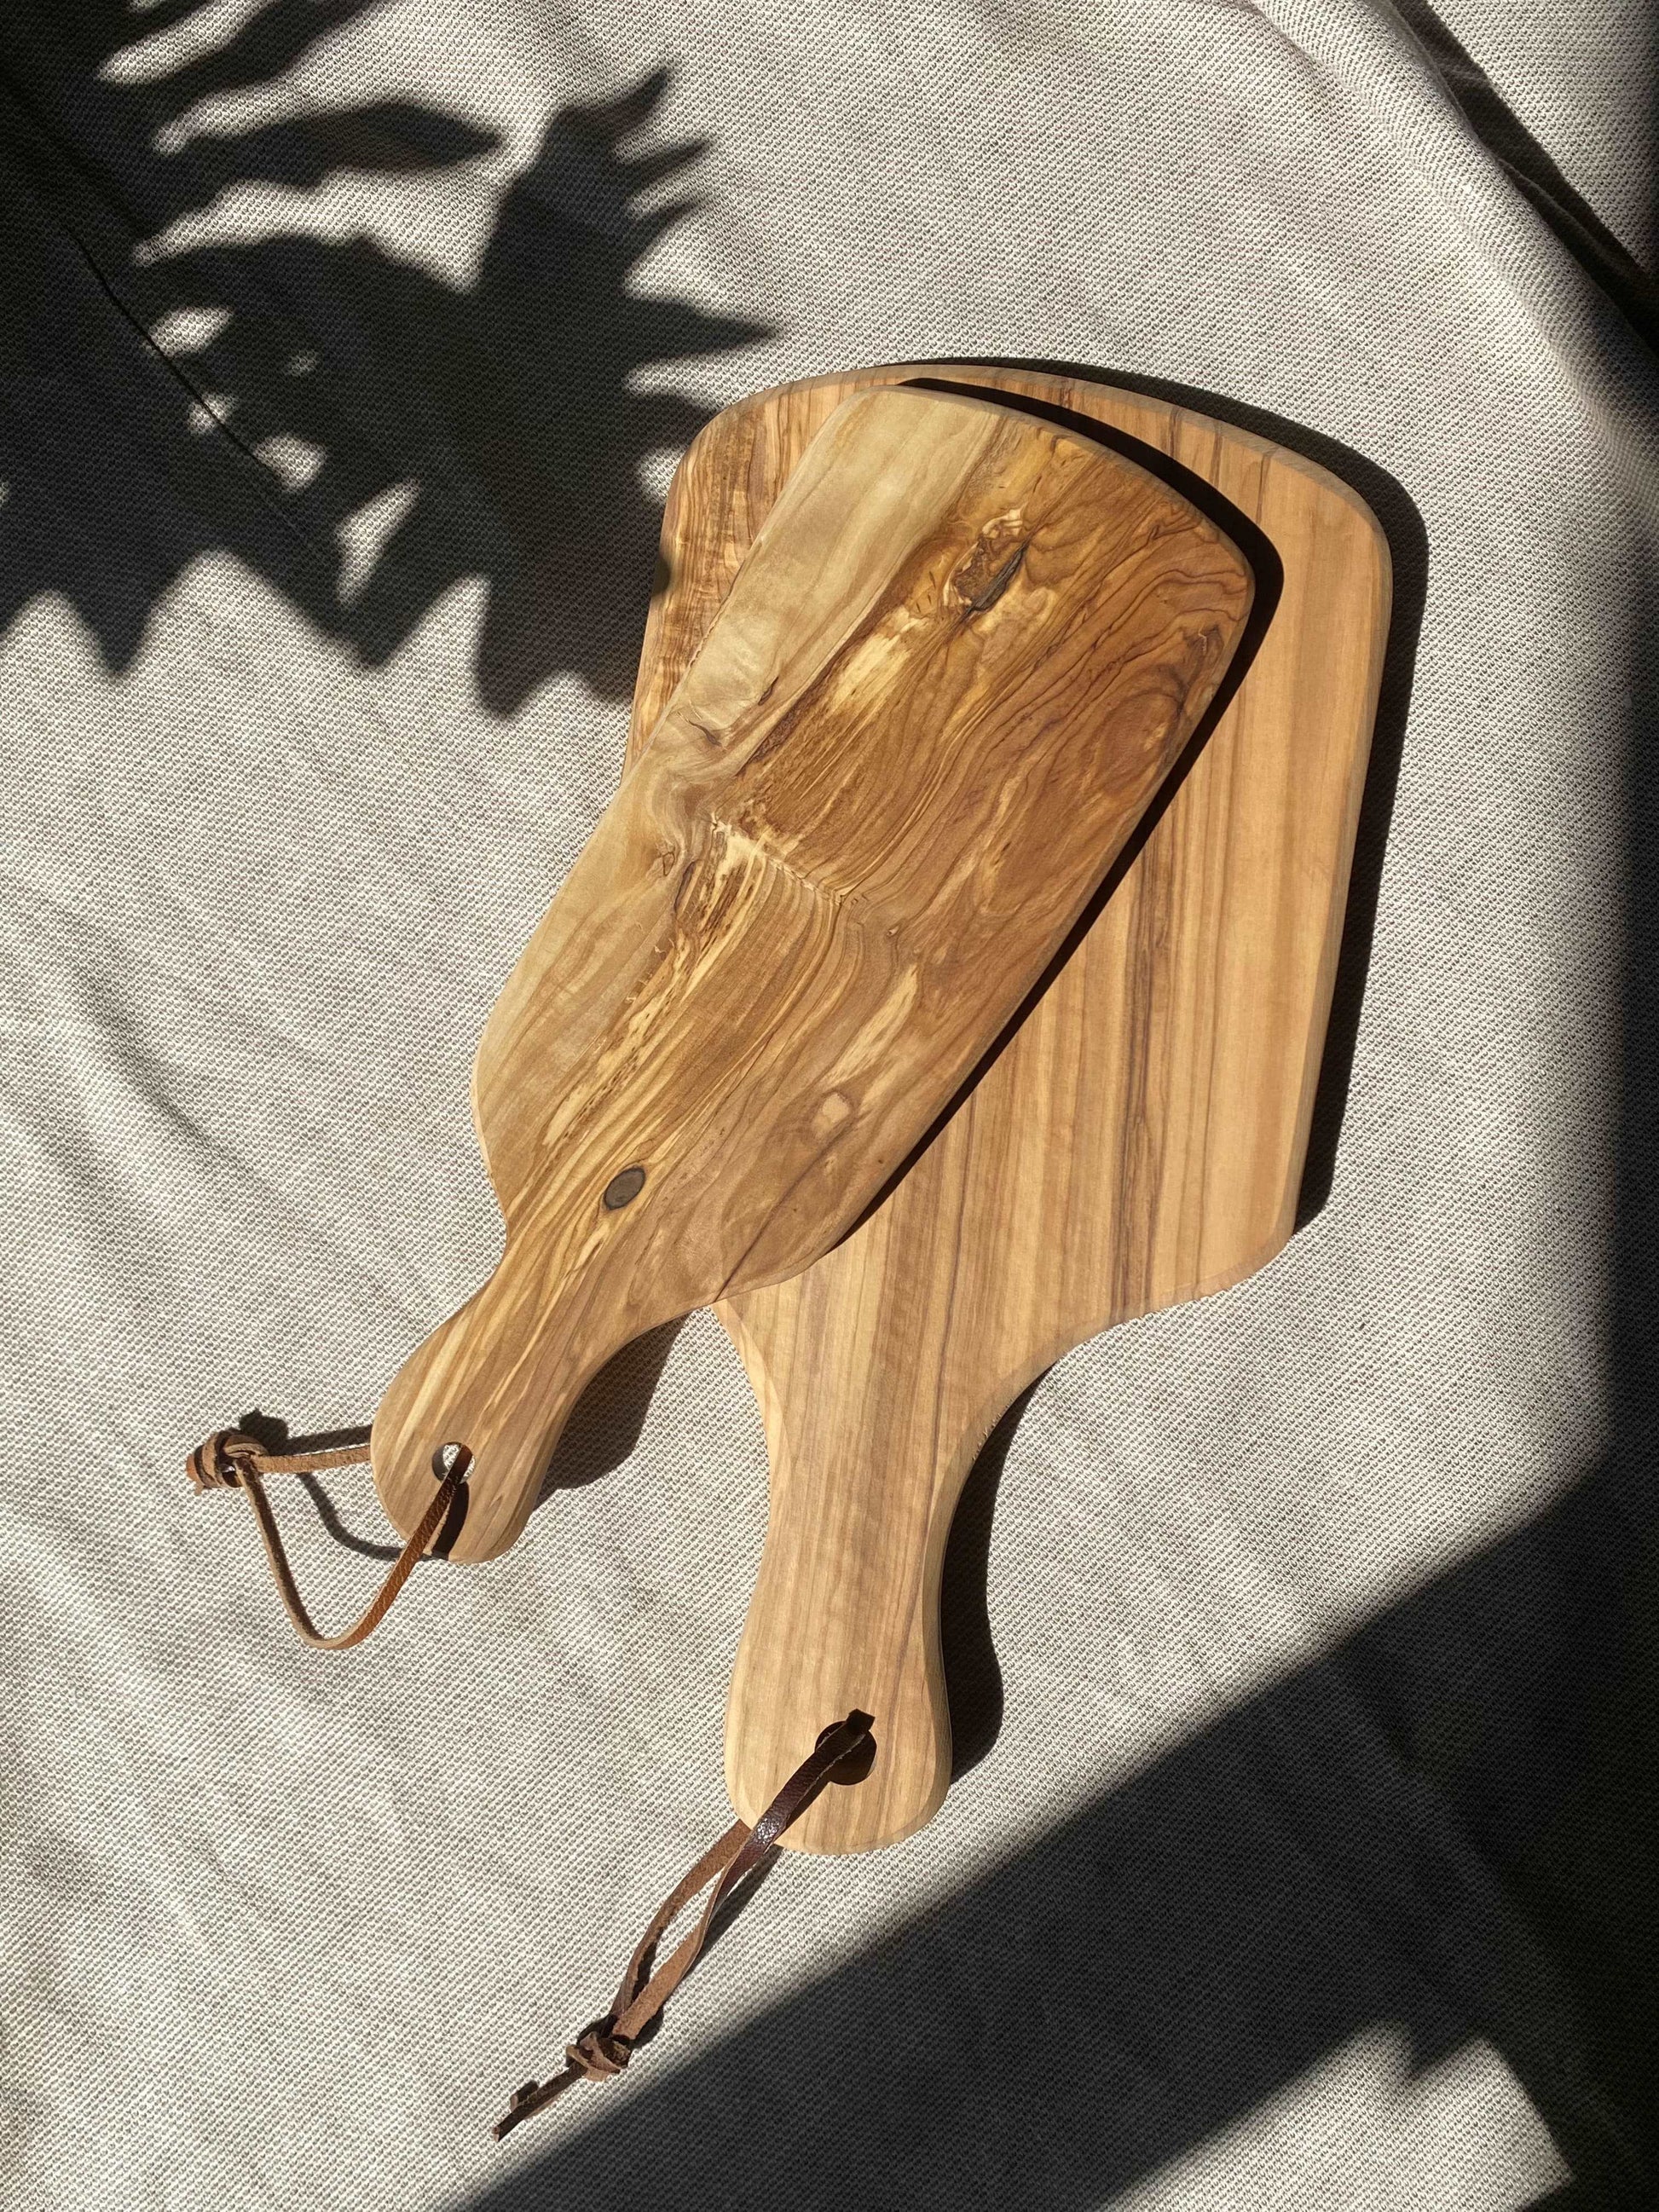 olive-wood-chopping-board-bethlehem-palestine